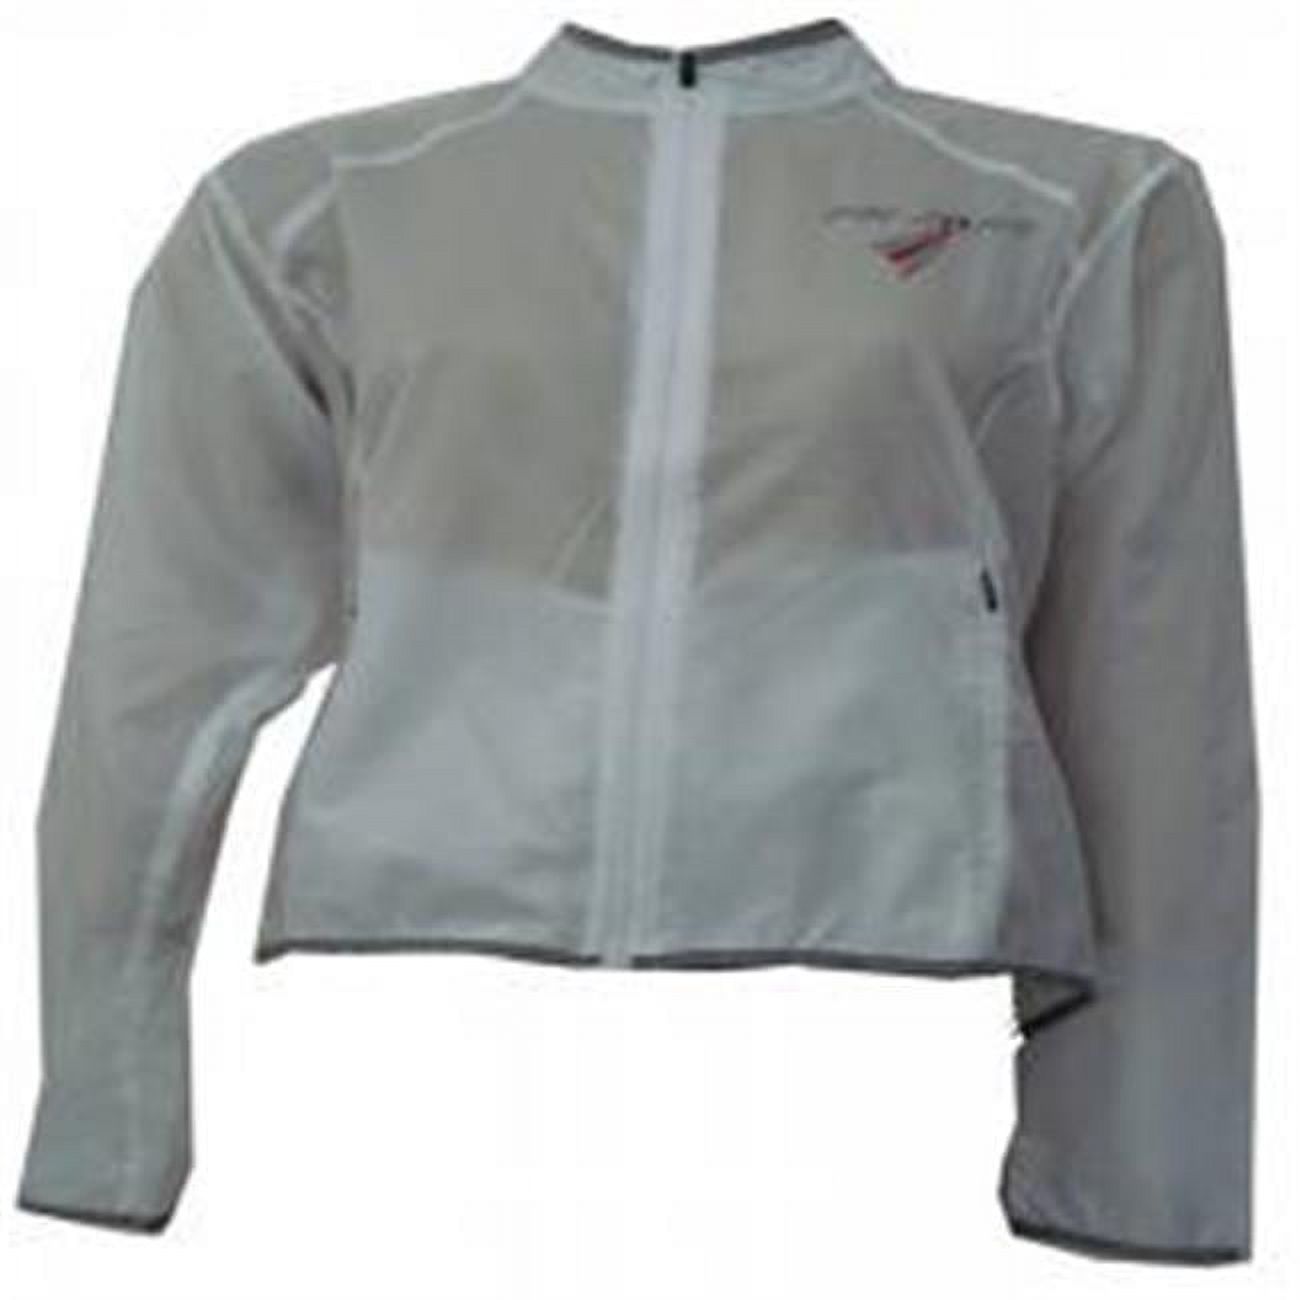 PN JONE White Breeze Jacket Women Wind Coat - Small - image 1 of 1